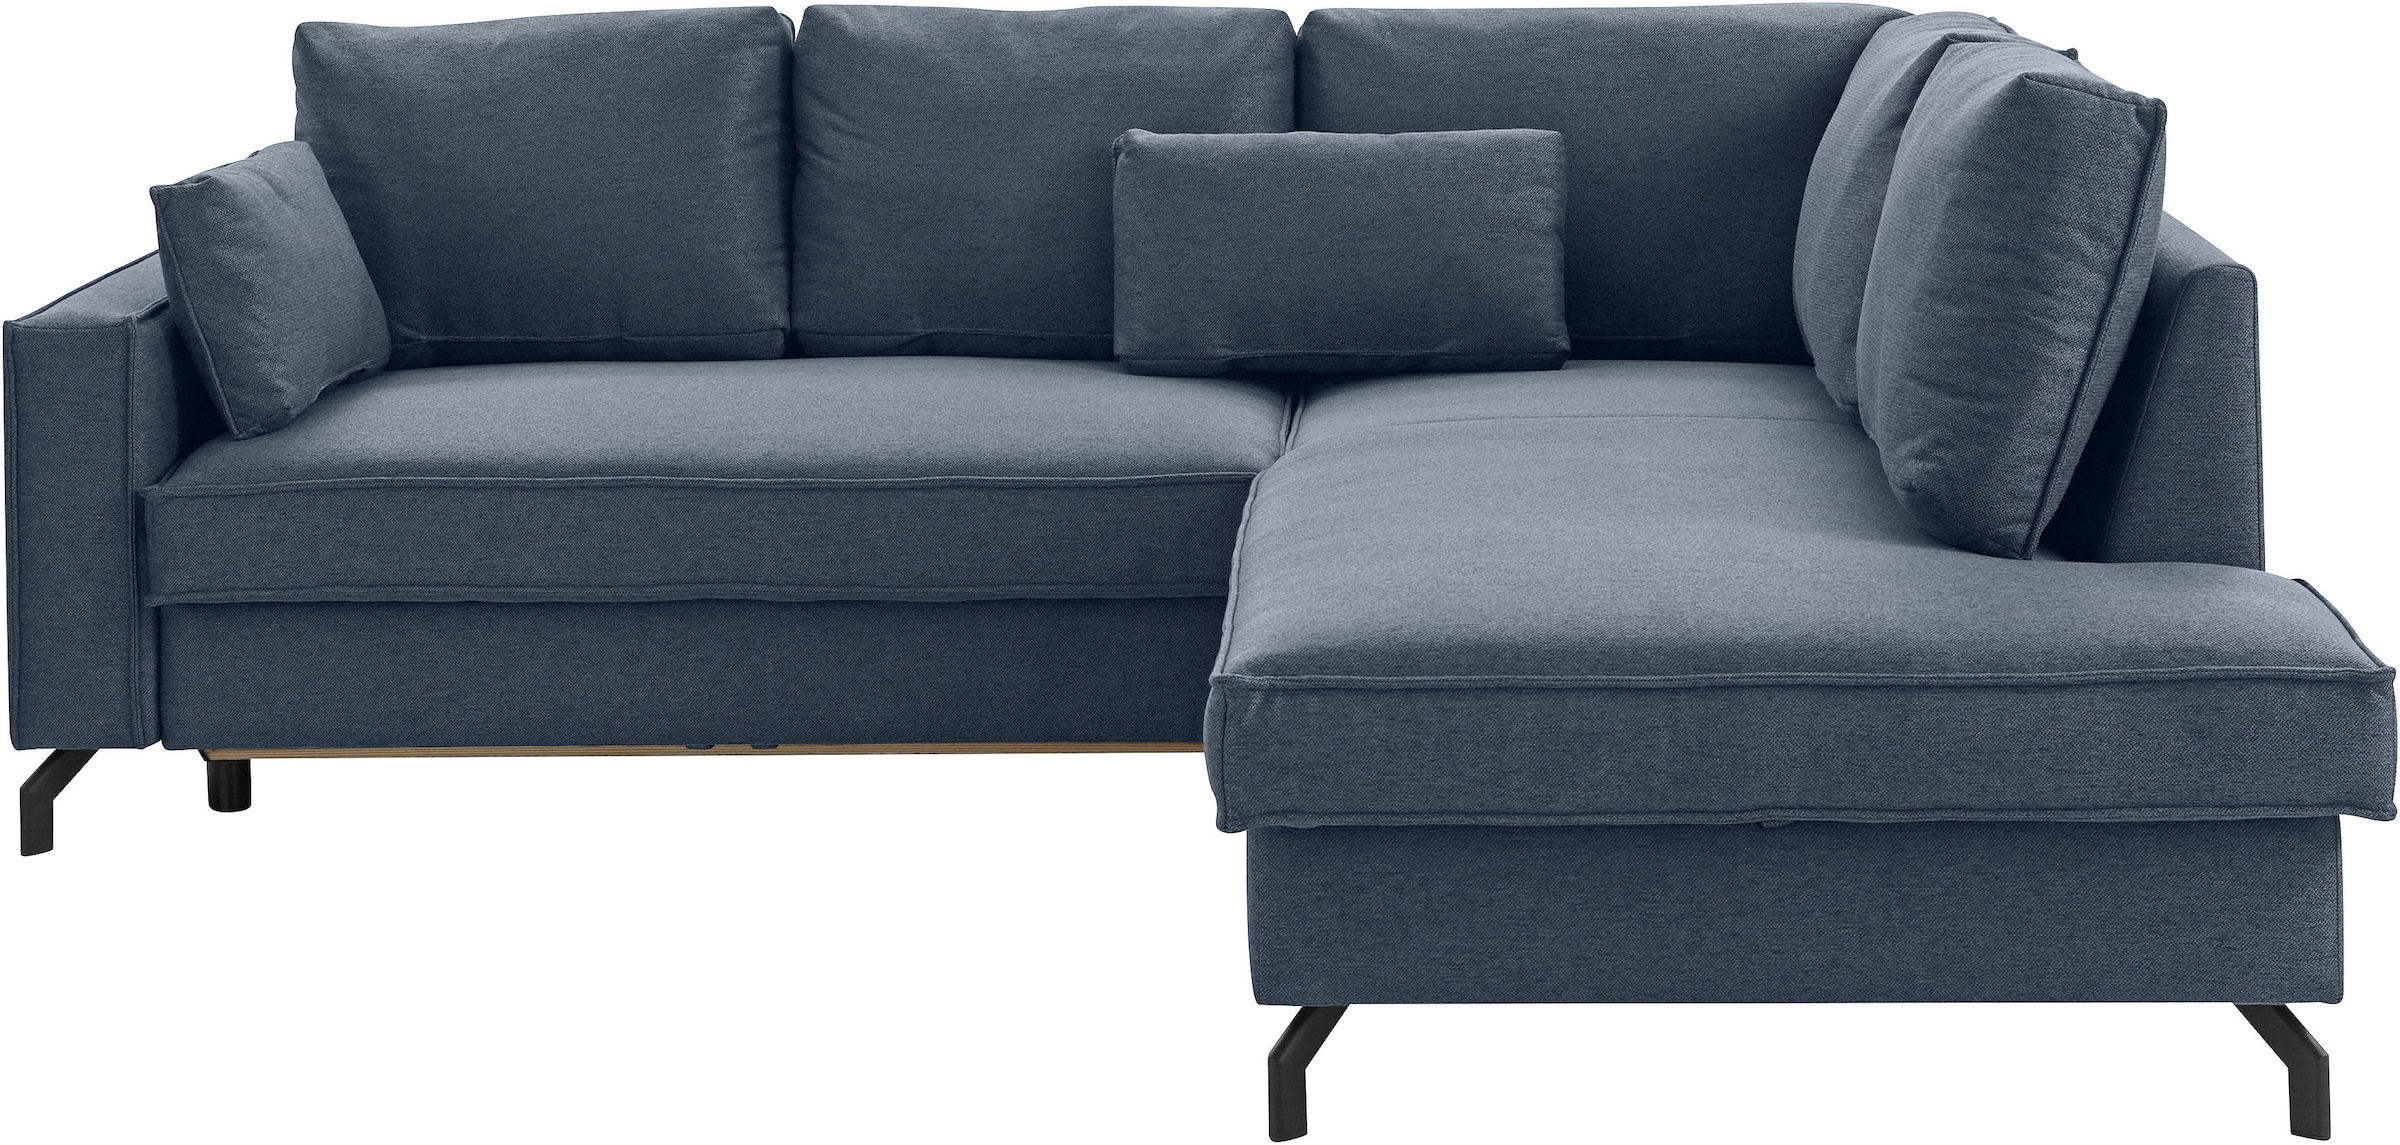 exxpo - sofa fashion Ecksofa »Daytona, L-Form«, wahlweise mit Bettfunktion und Bettkasten